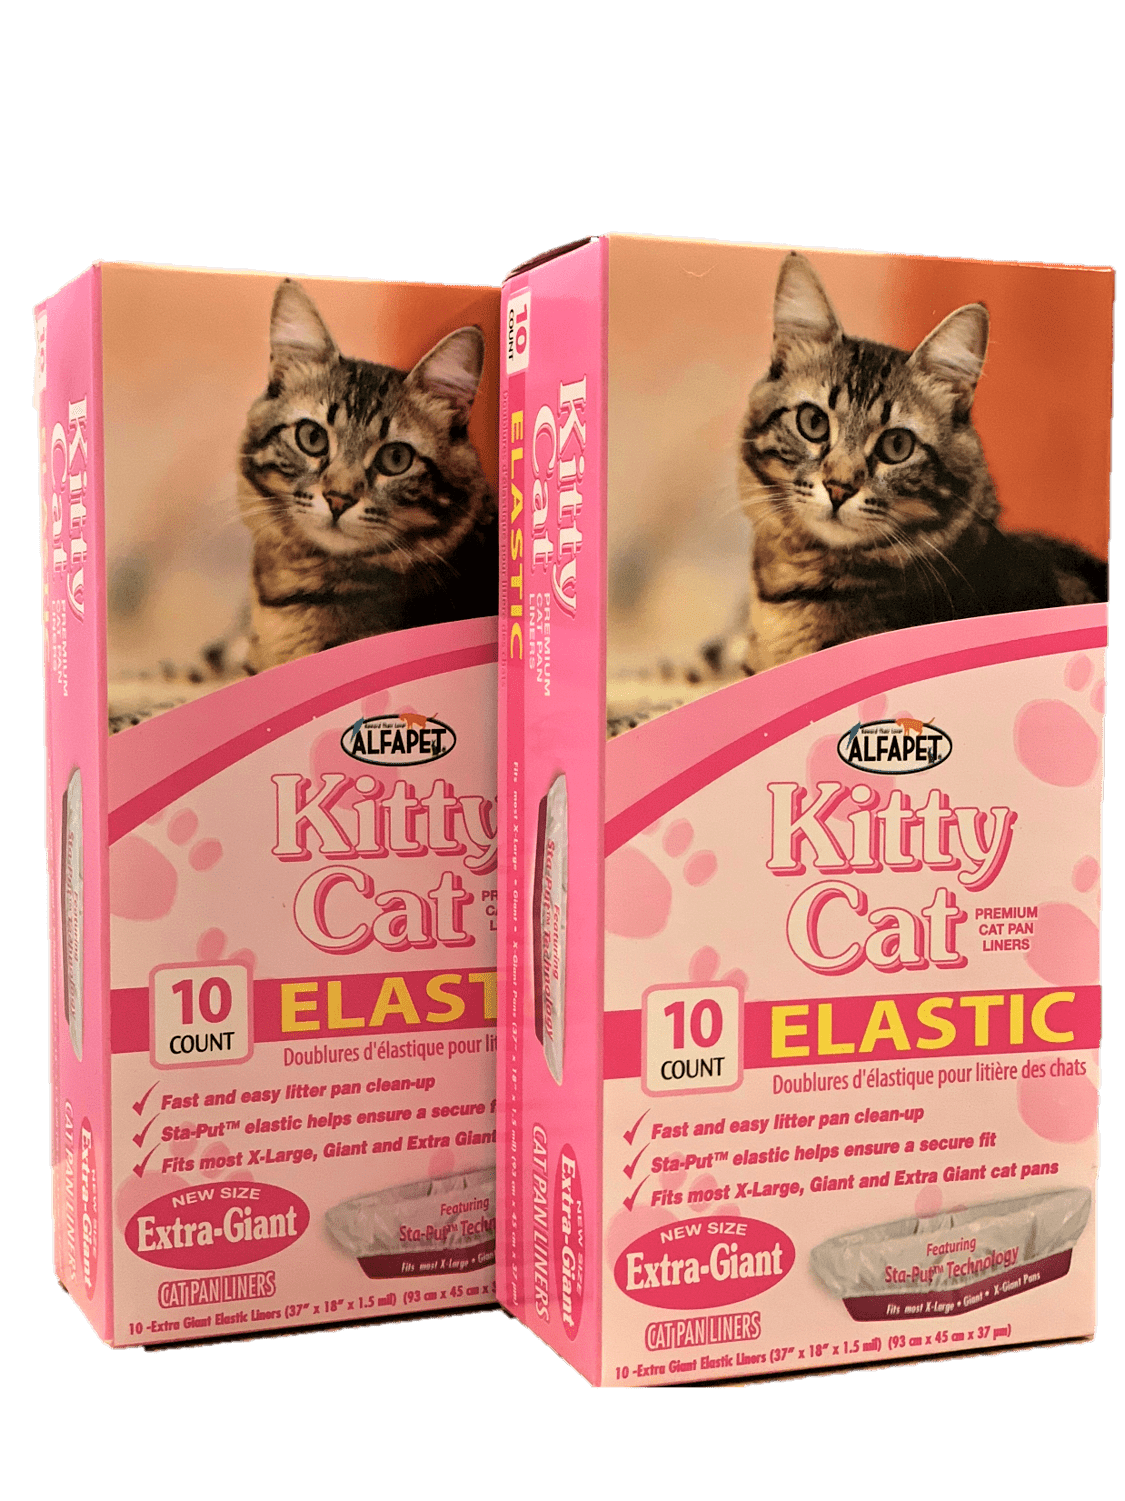 10 count Alfapet Kitty Cat Elastic Cat Pan Liners Pack of 4 